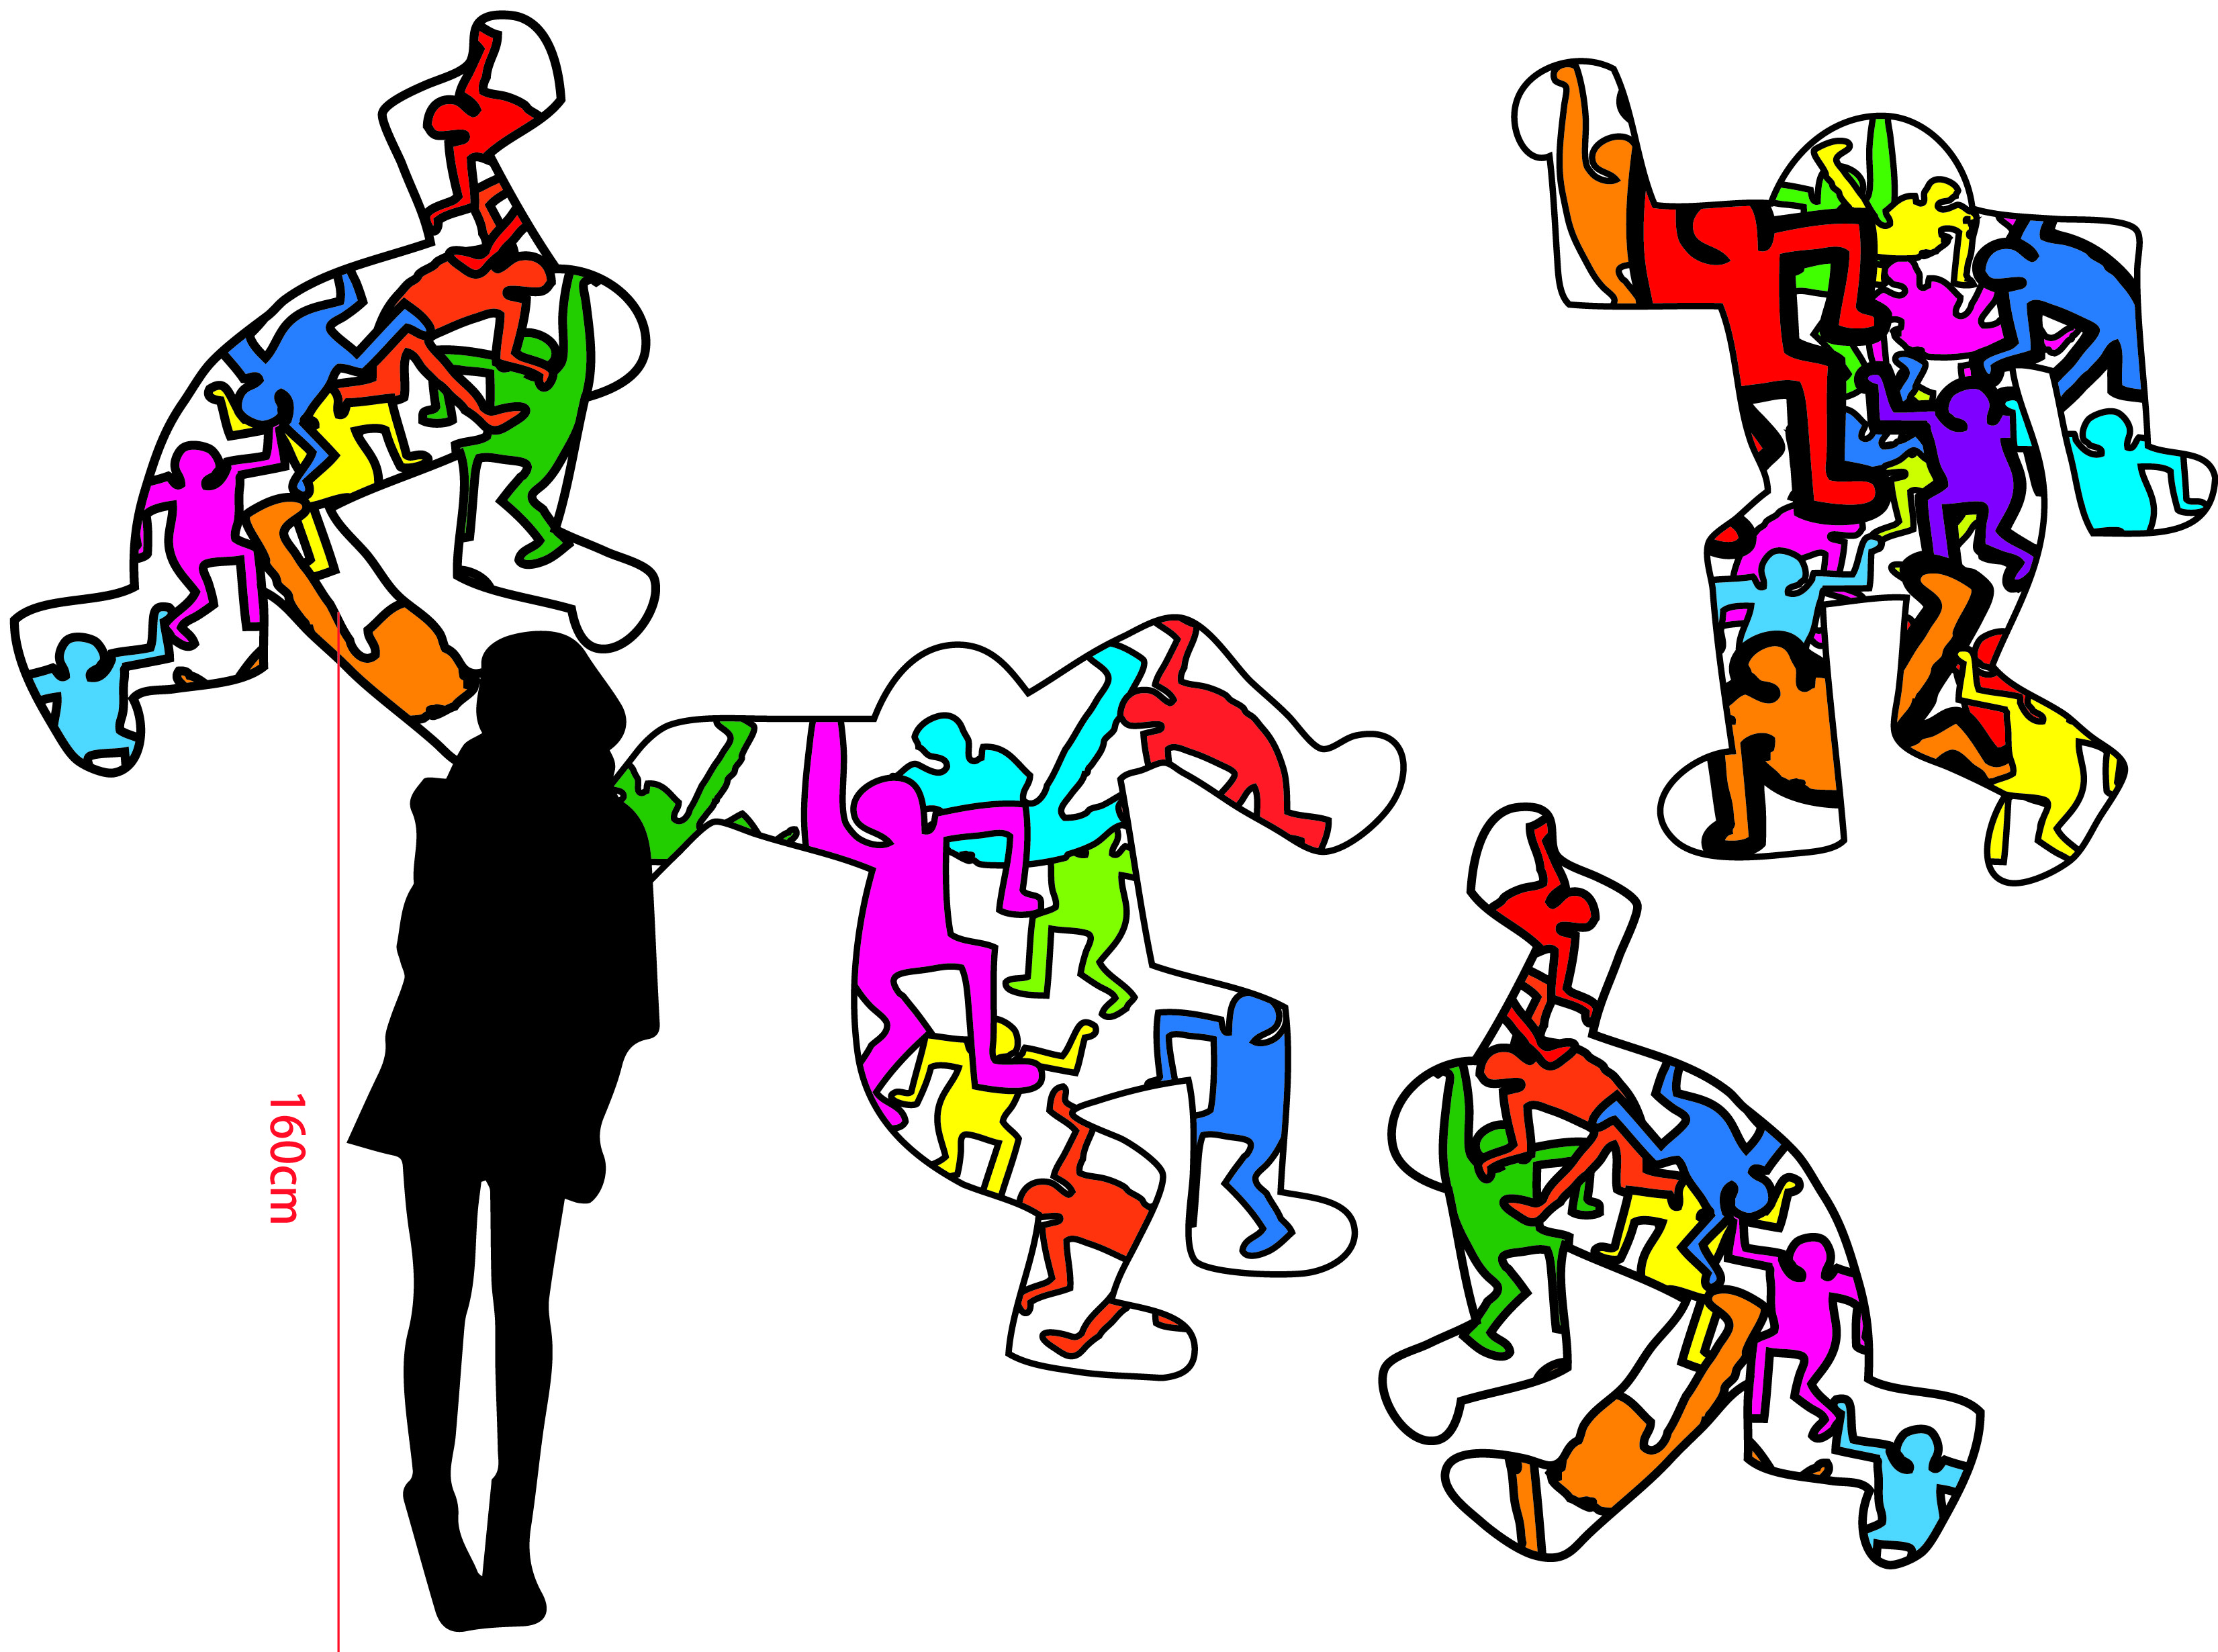 Keith Haring塗鴉創作工作坊